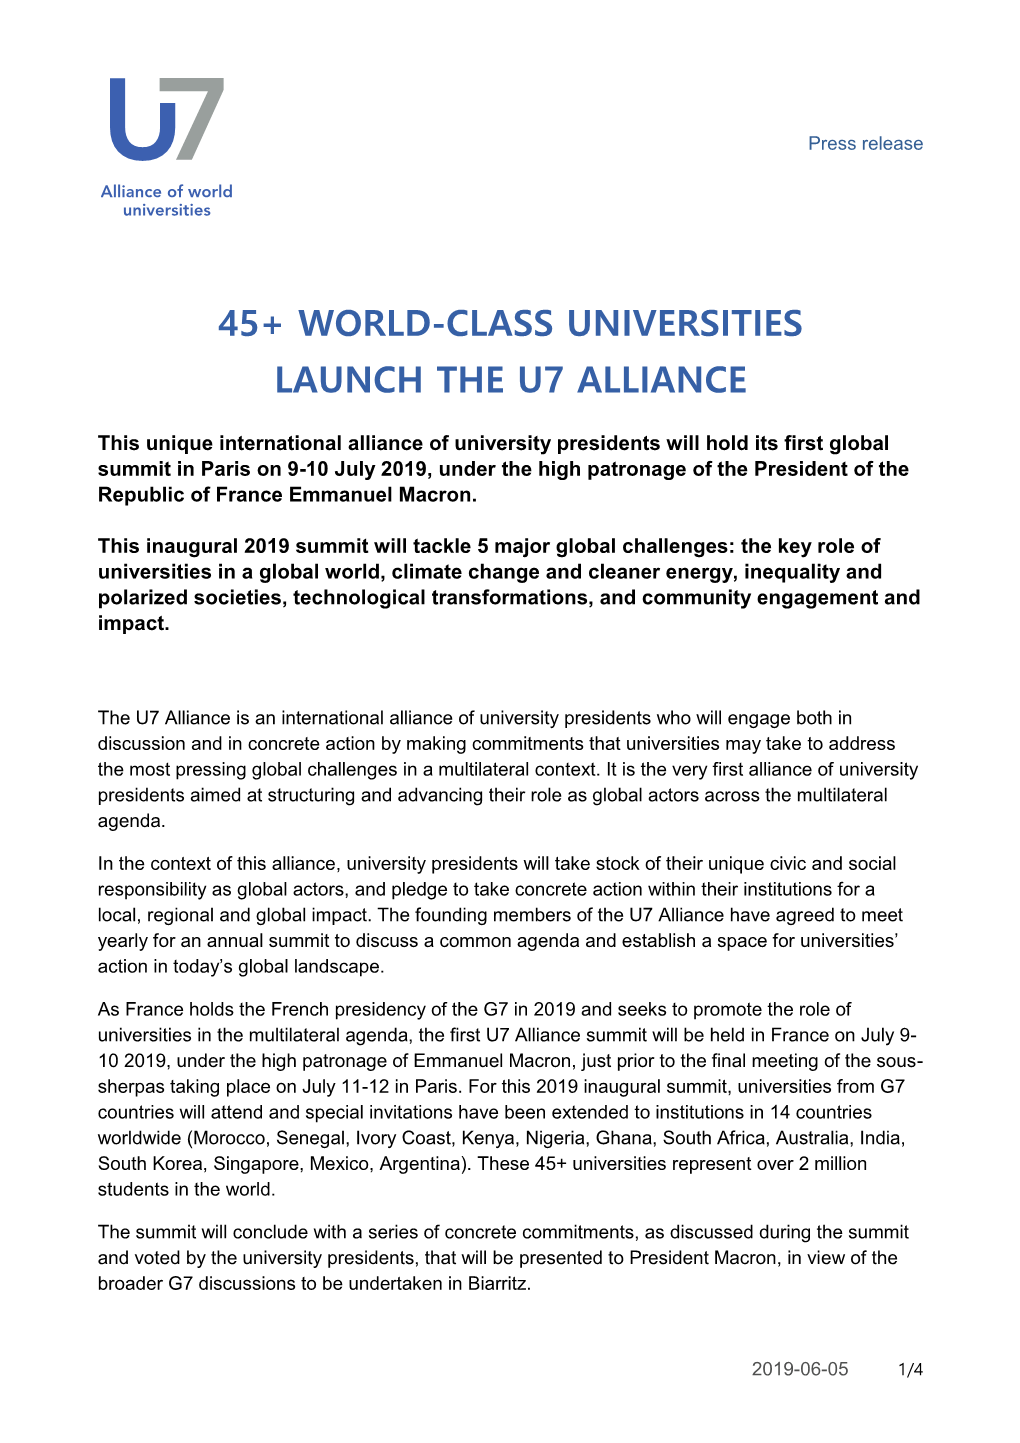 45+ World-Class Universities Launch the U7 Alliance